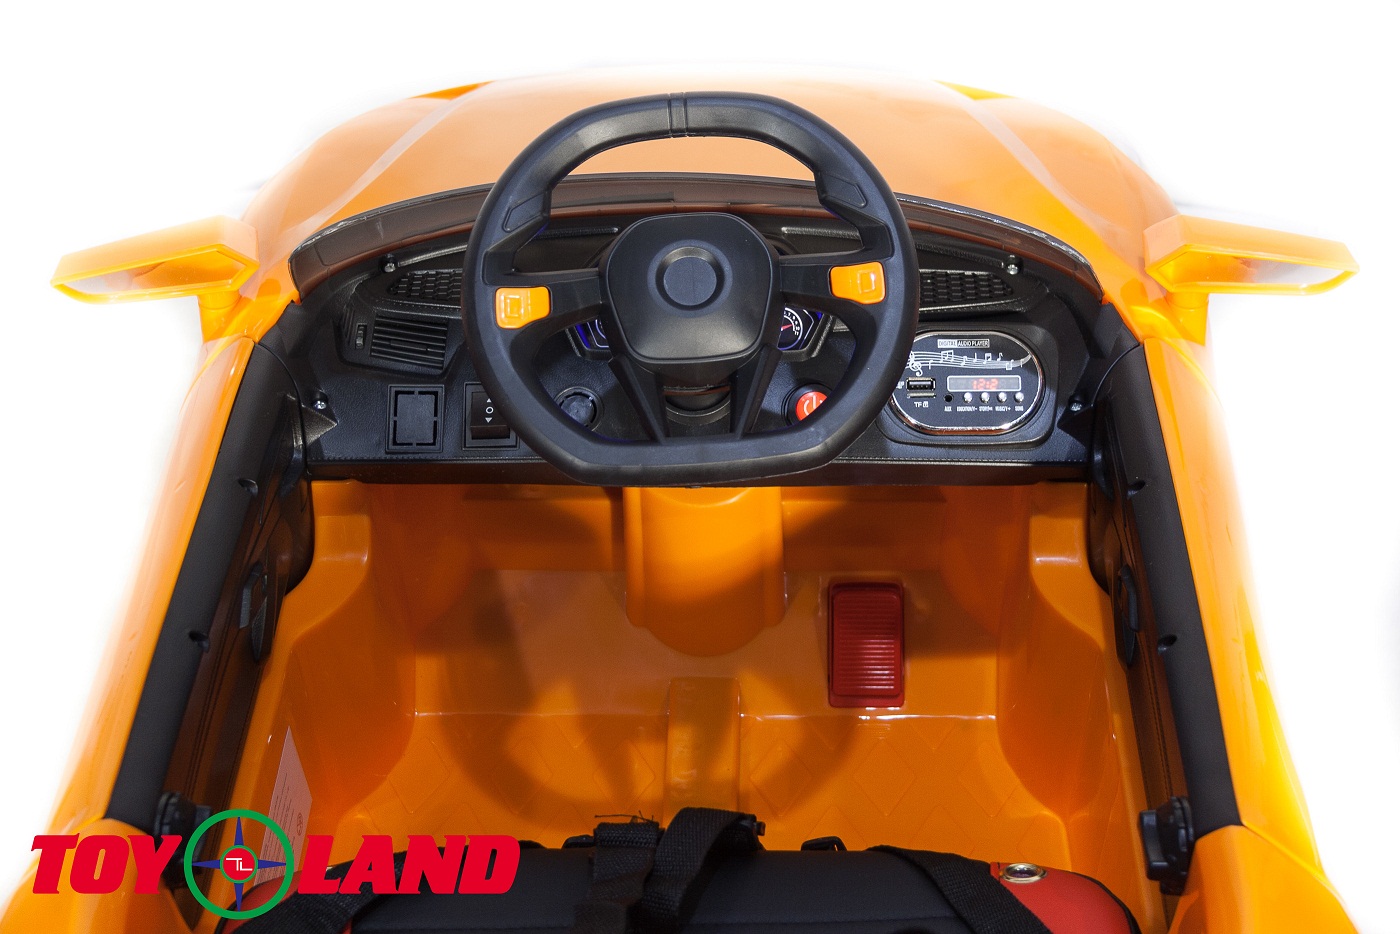 Электромобиль Mercedes Benz sport YBG6412, оранжевый  